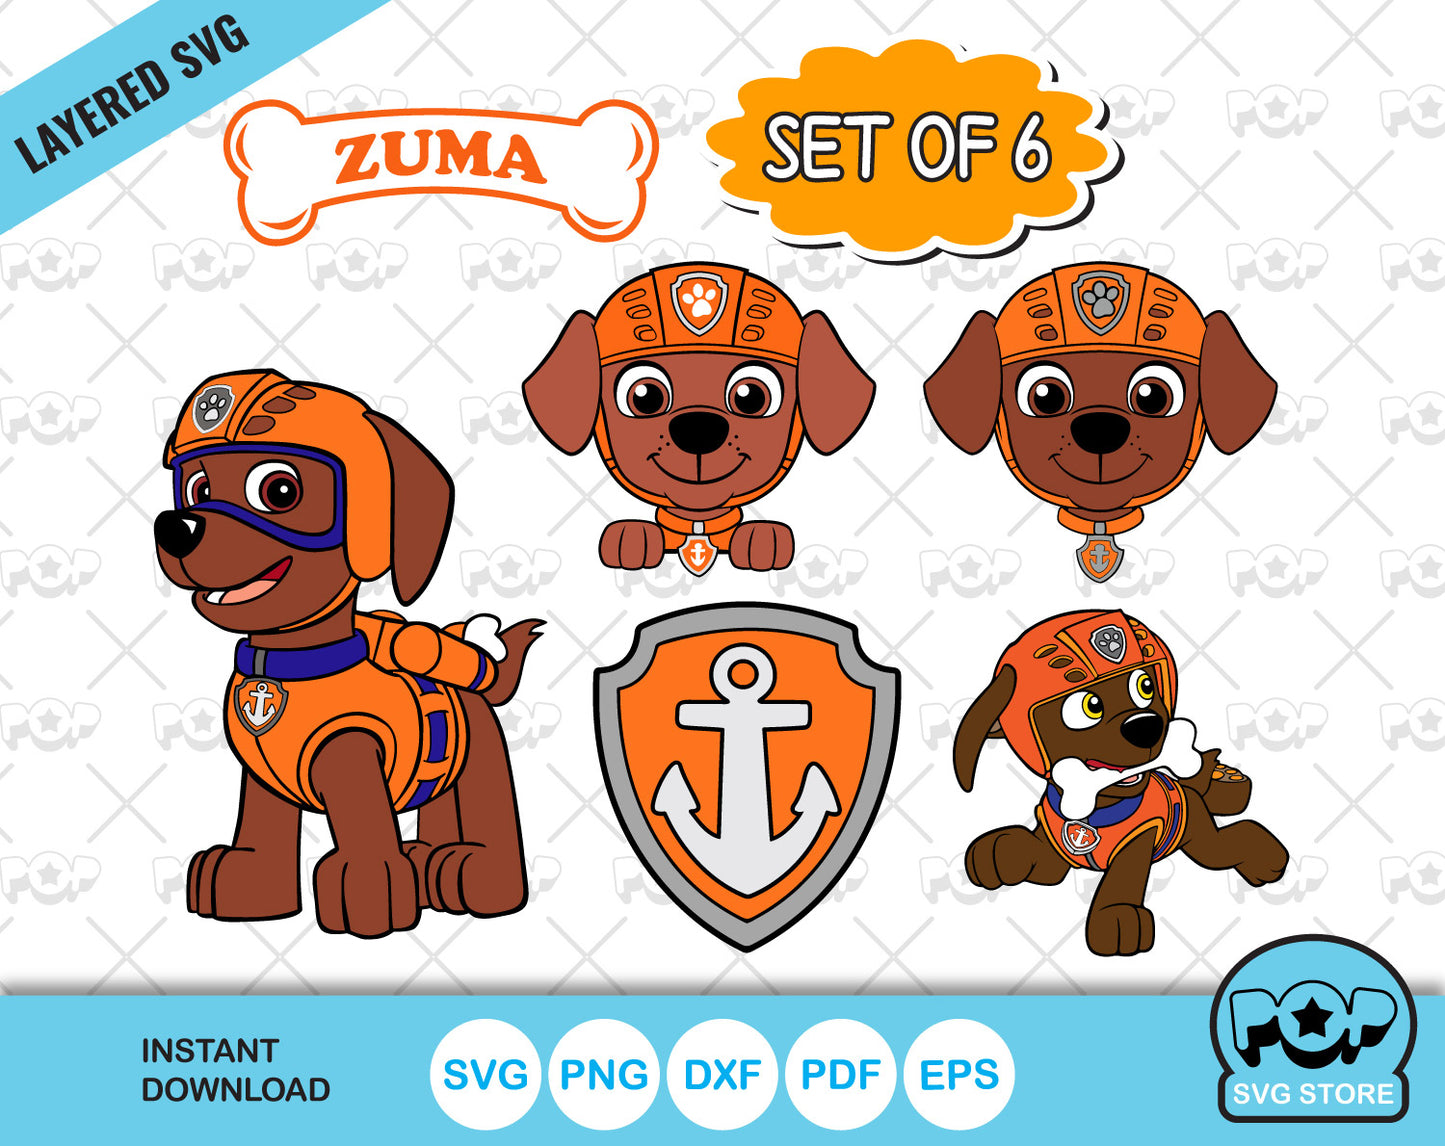 Zuma 6 cliparts bundle, Paw Patrol SVG cut files for cricut silhouette, SVG, PNG, DXF, instant download